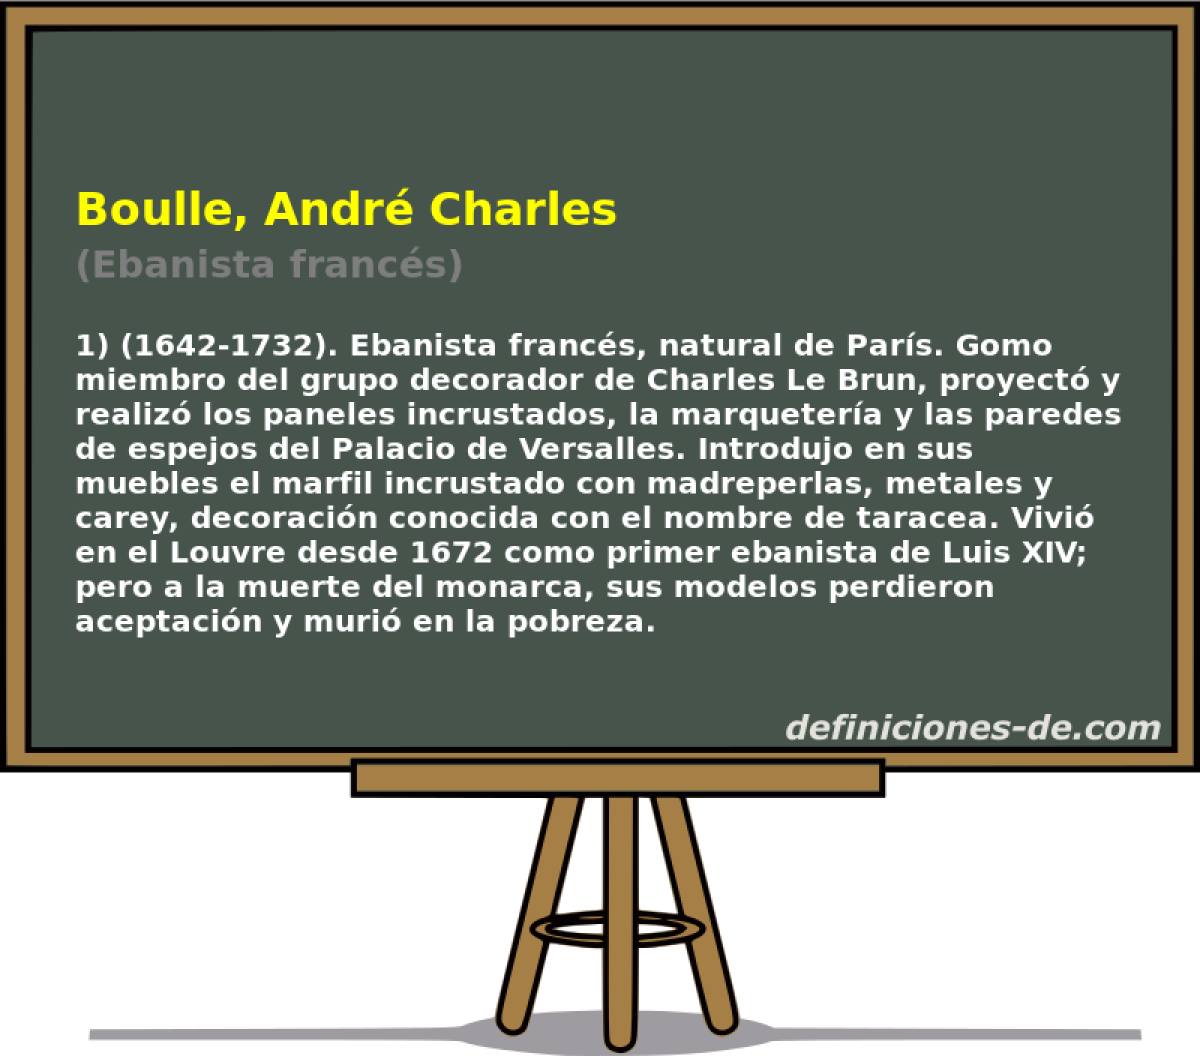 Boulle, Andr Charles (Ebanista francs)